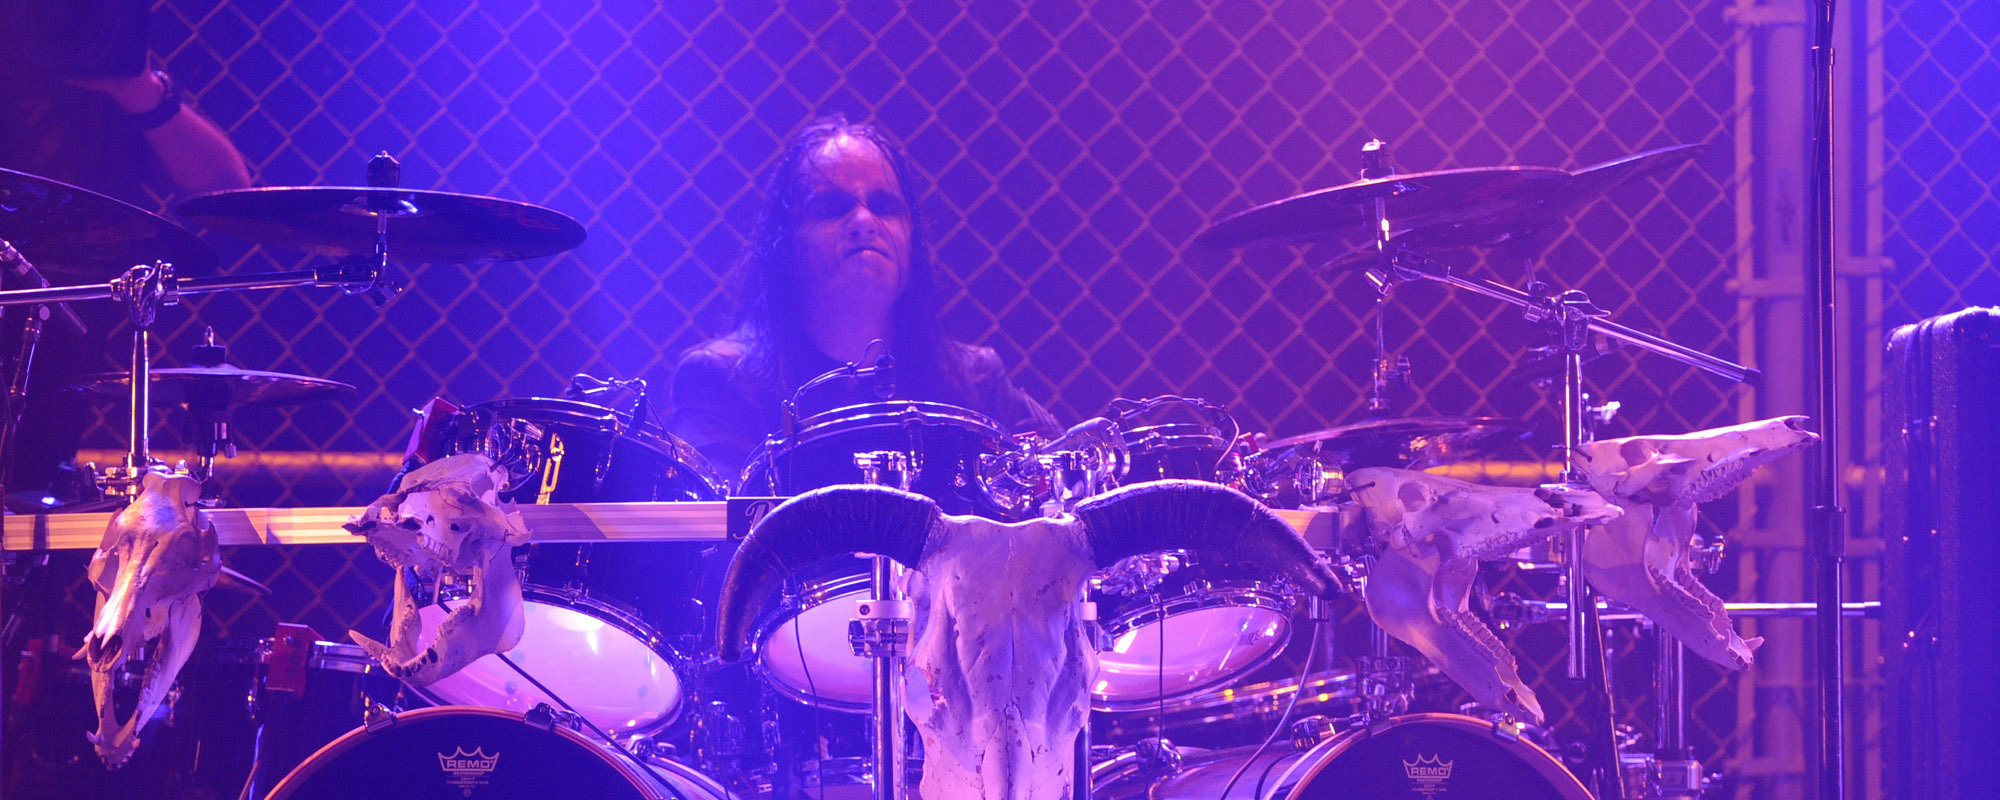 Slipknot Drummer Joey Jordison Dead at 46